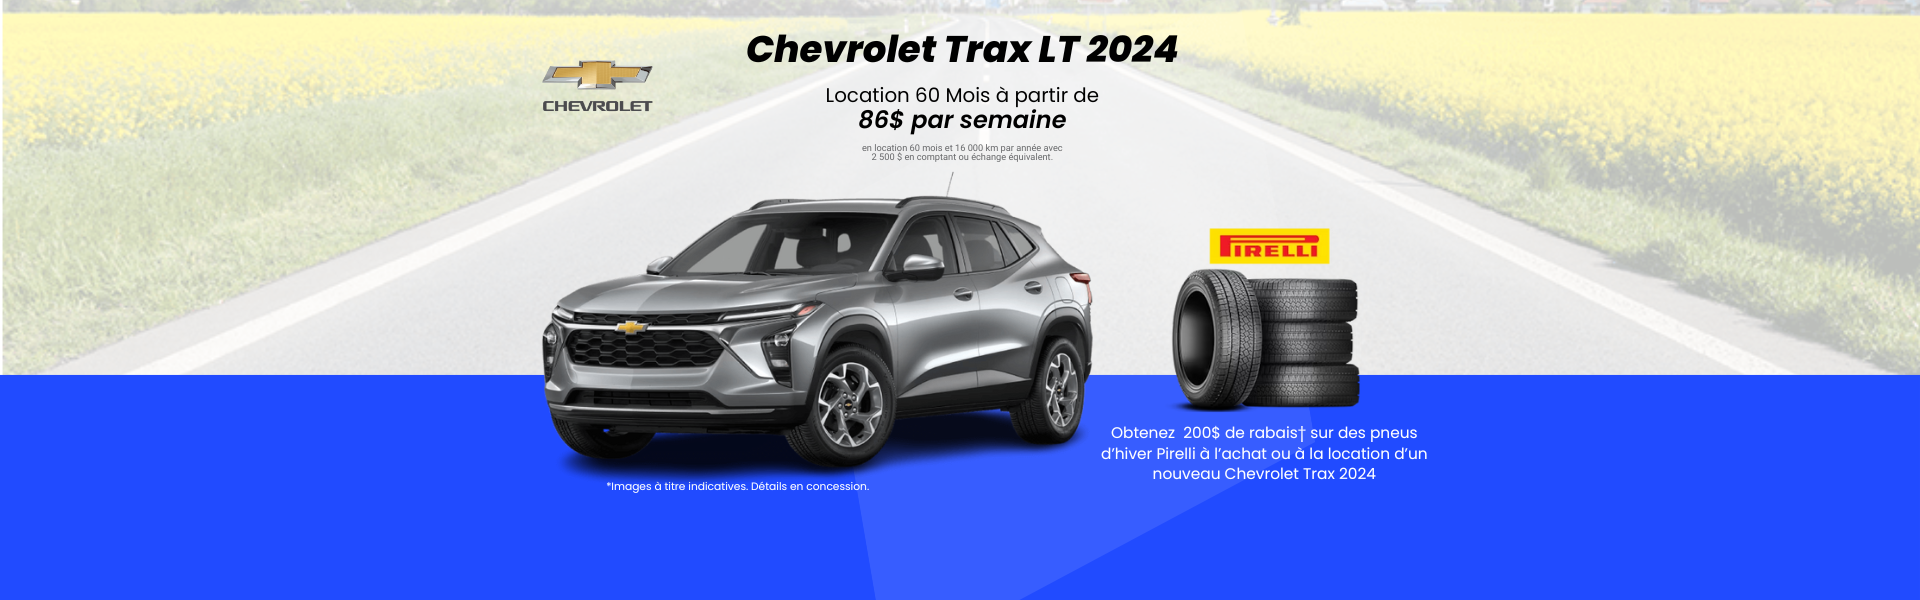 Chevrolet Trax 2024